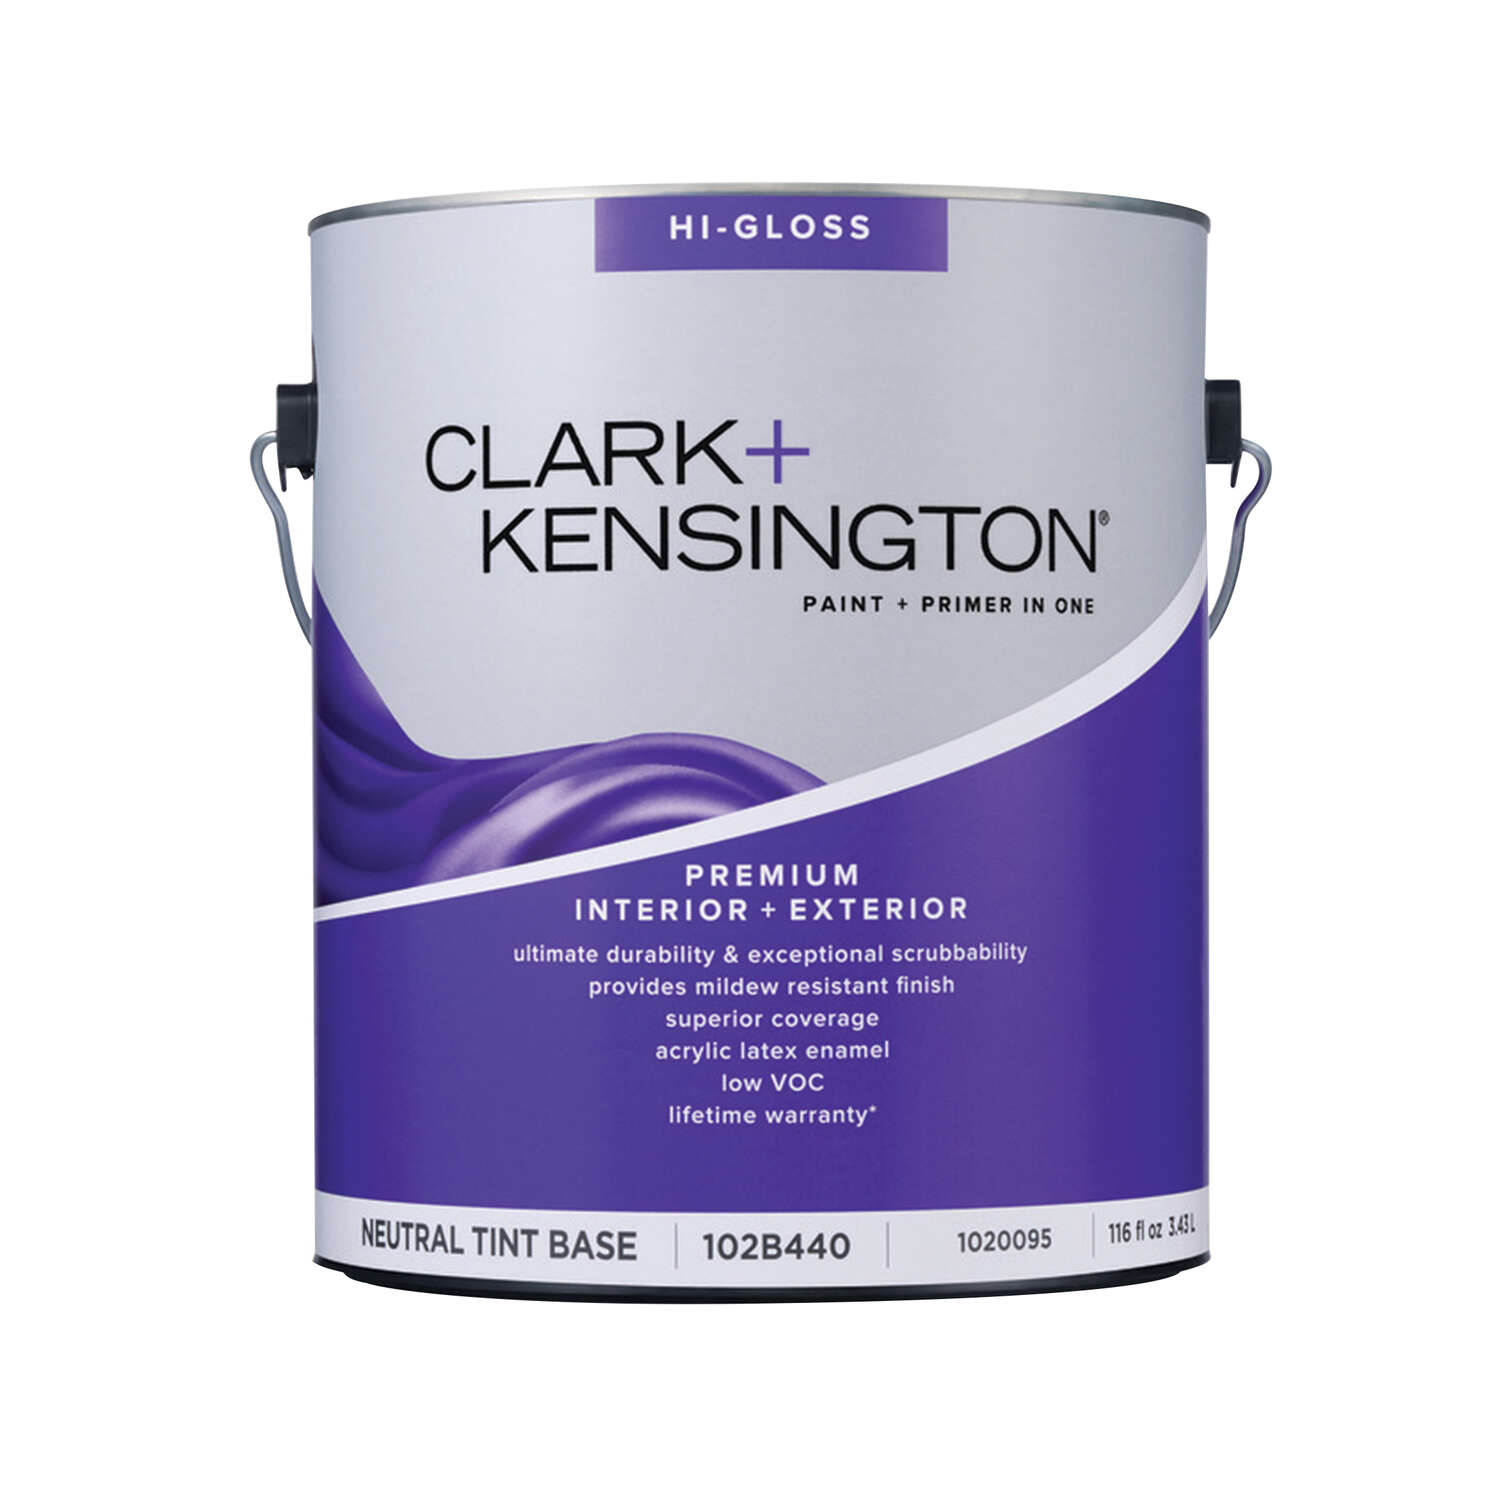 Clark+Kensington HighGloss Tint Base Neutral Base Premium